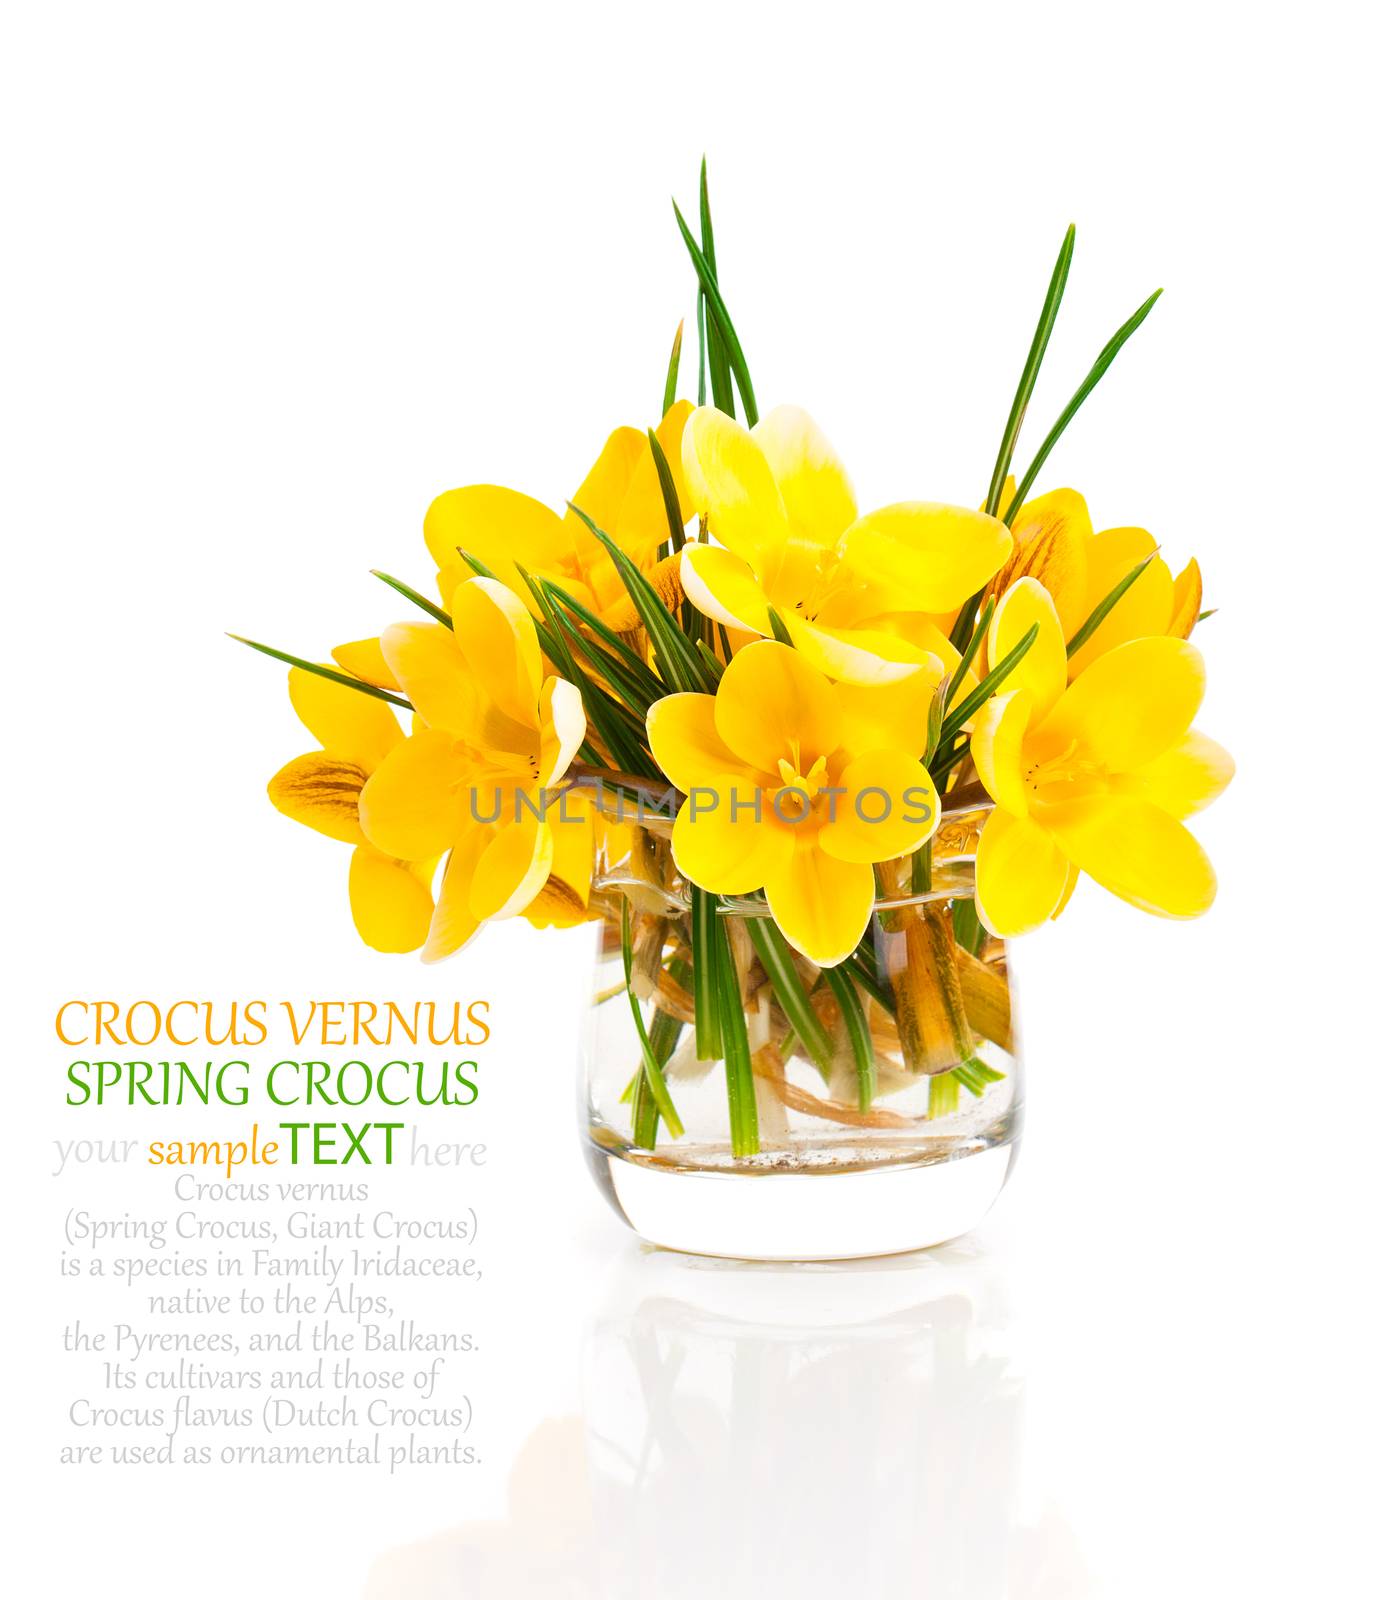 yellow crocus vernus (Spring Crocus) isolated on white background